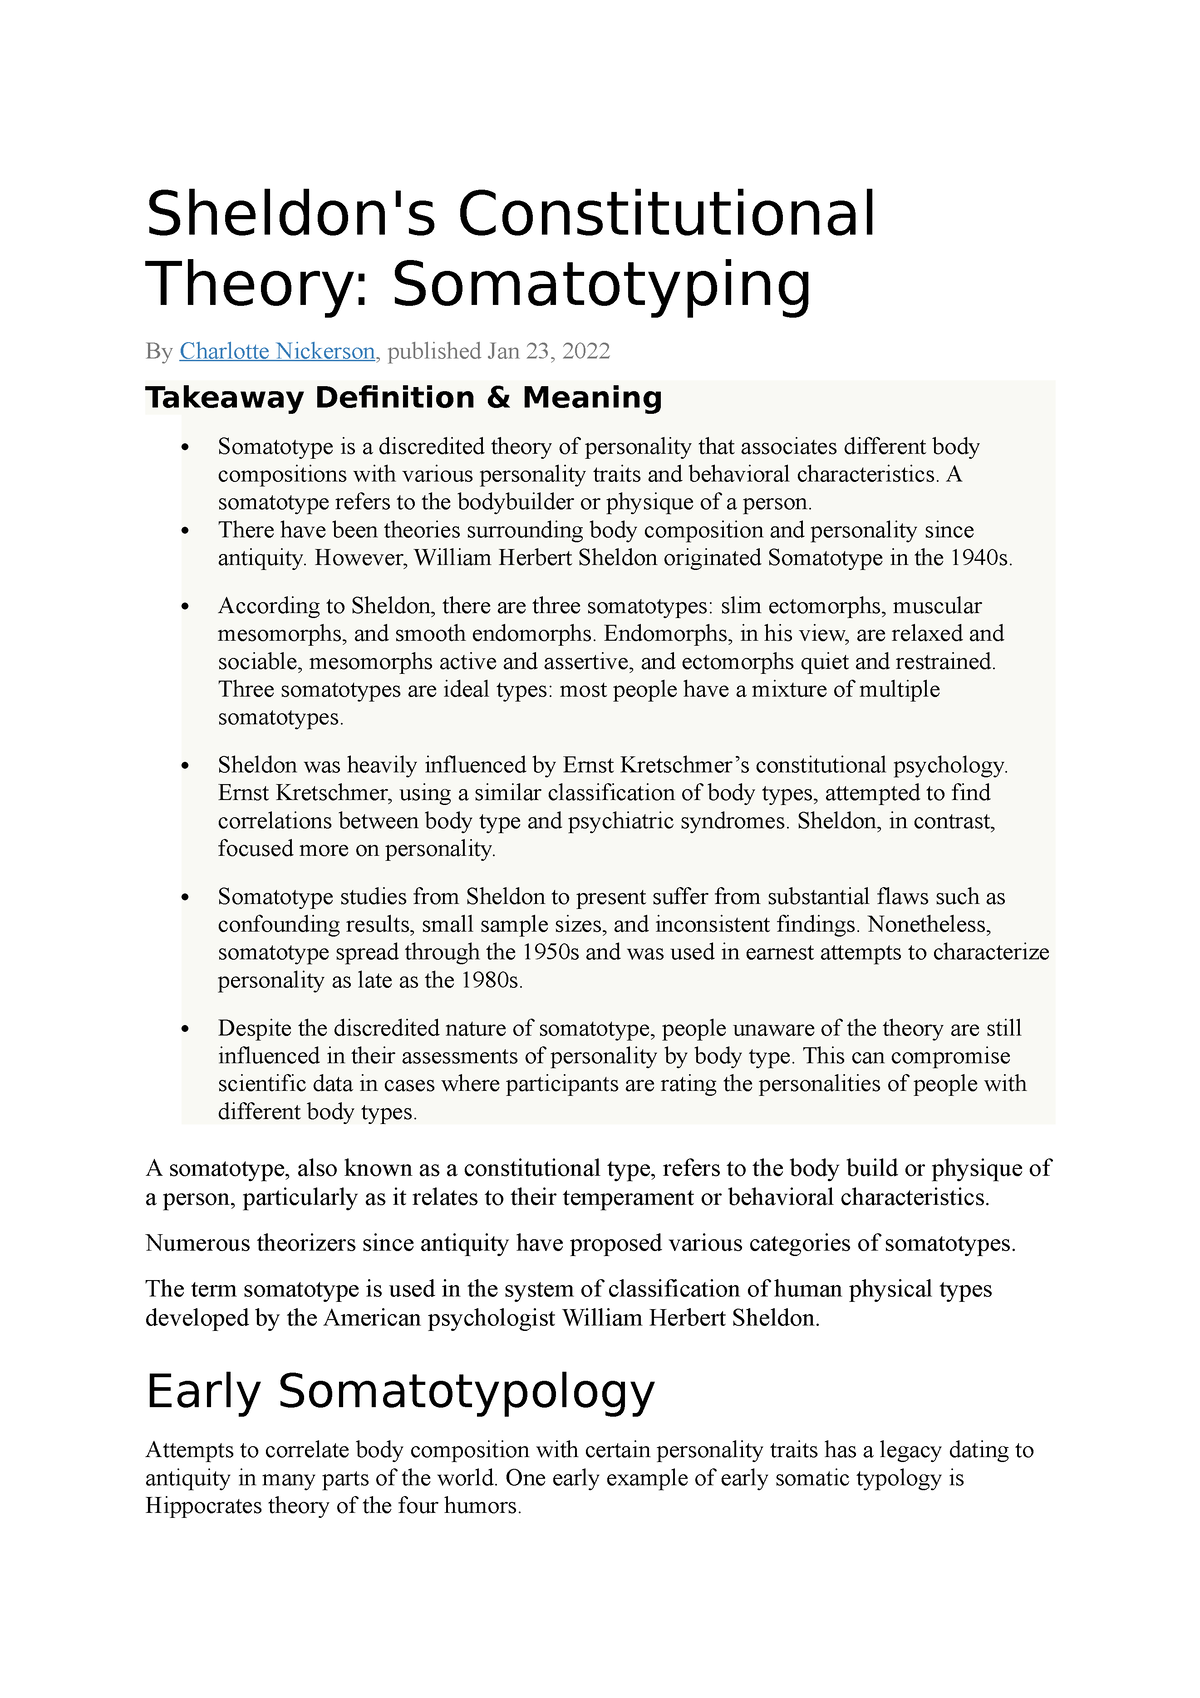 Sheldon's Constitutional Theory: Somatotyping